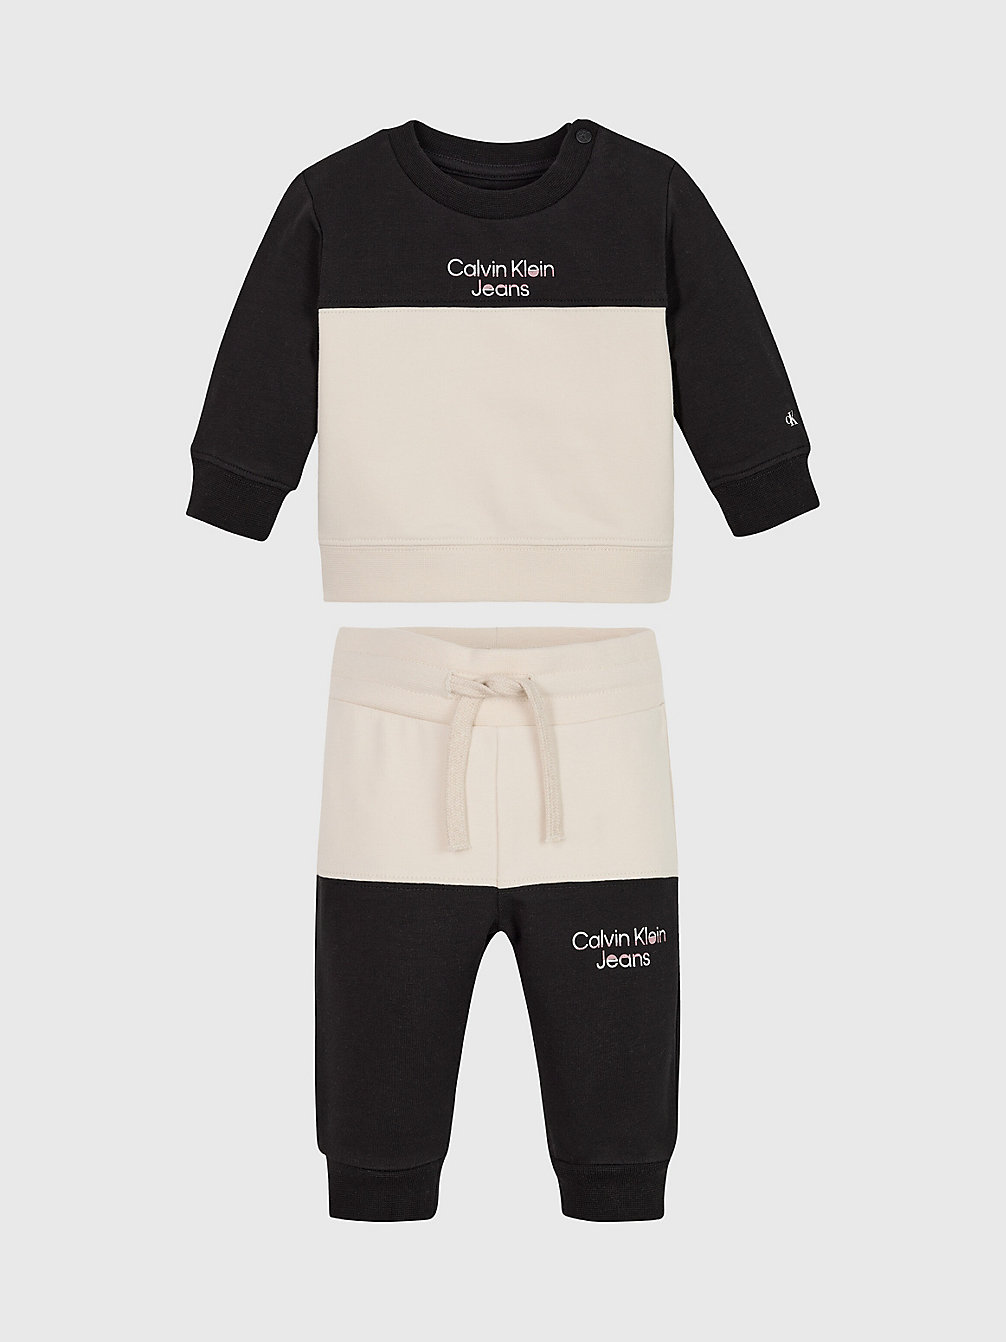 CK BLACK Newborn Colourblock Tracksuit undefined newborn Calvin Klein